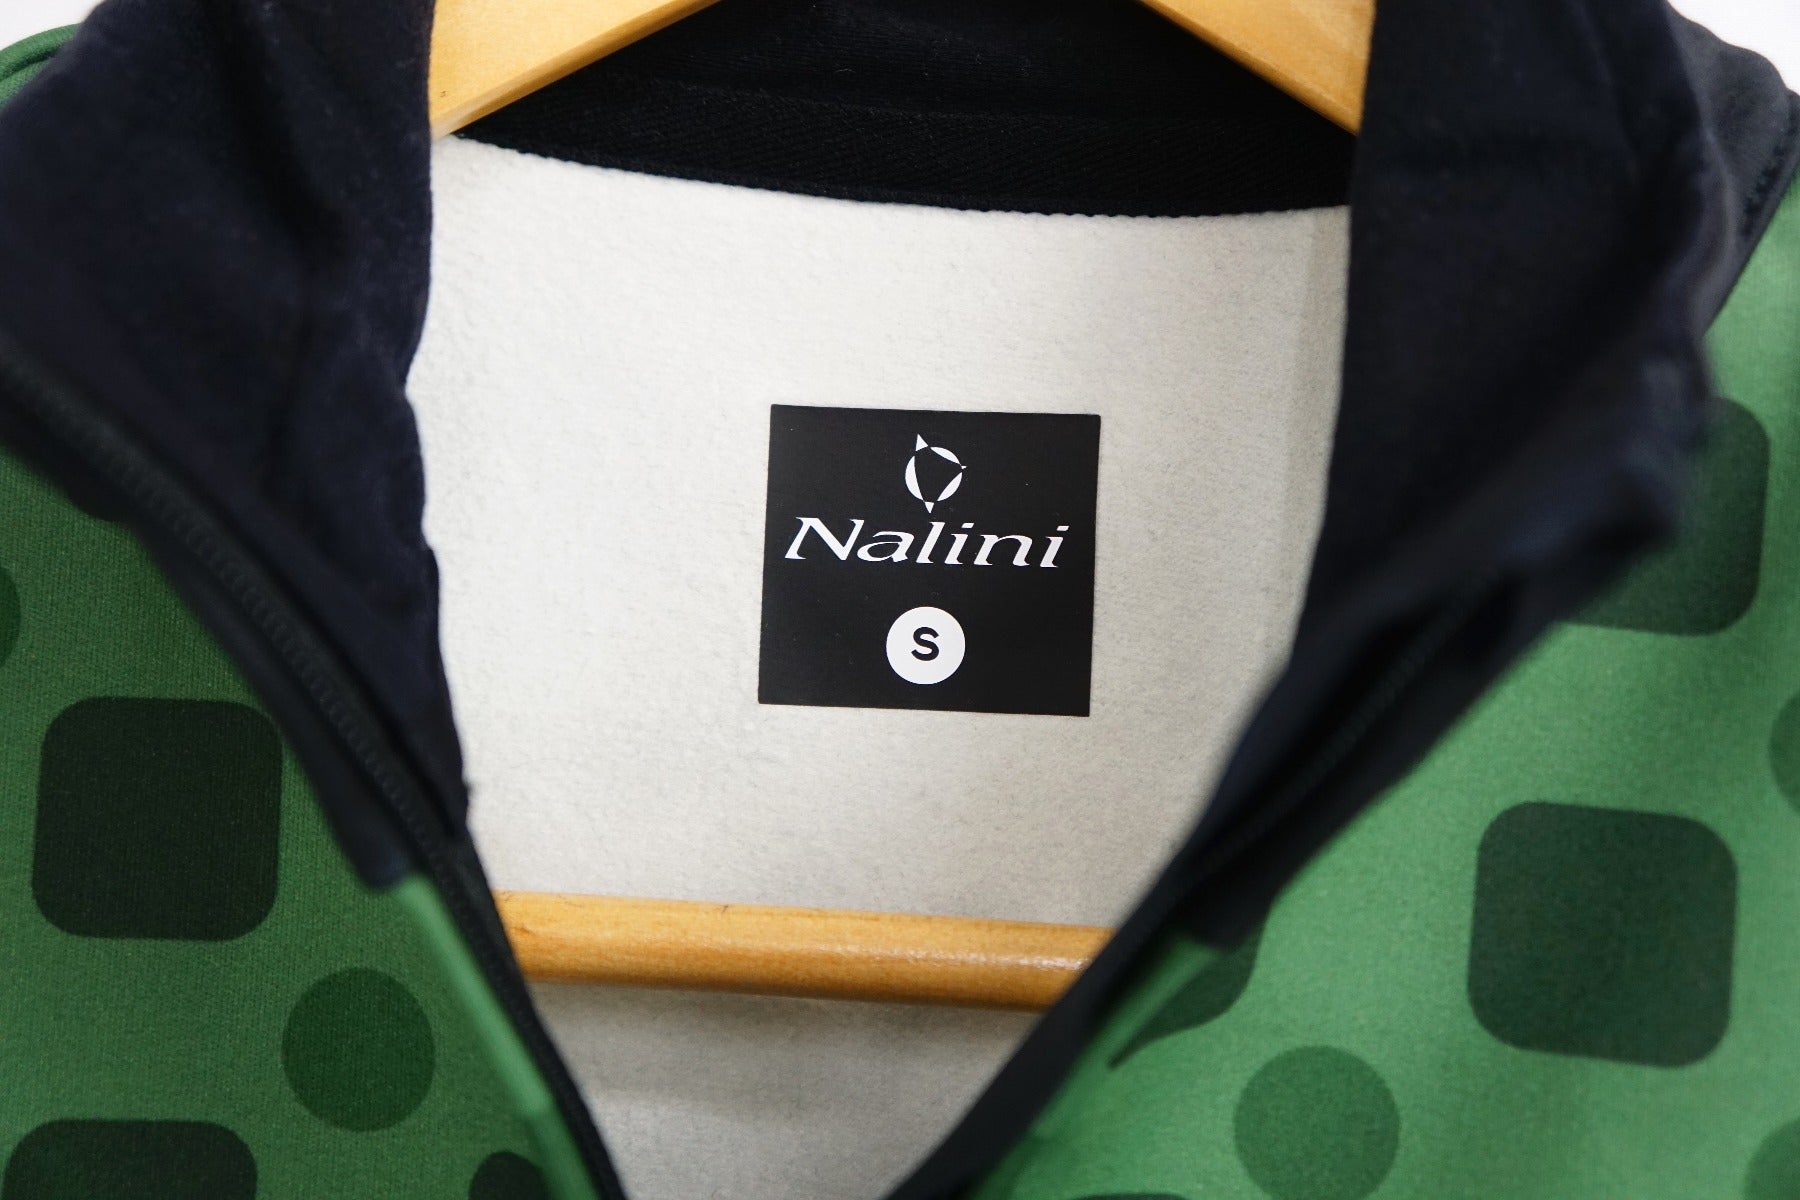 NALINI 「ナリー二」 AIW WS LADY JKT 2.0 GREEN ジャケット